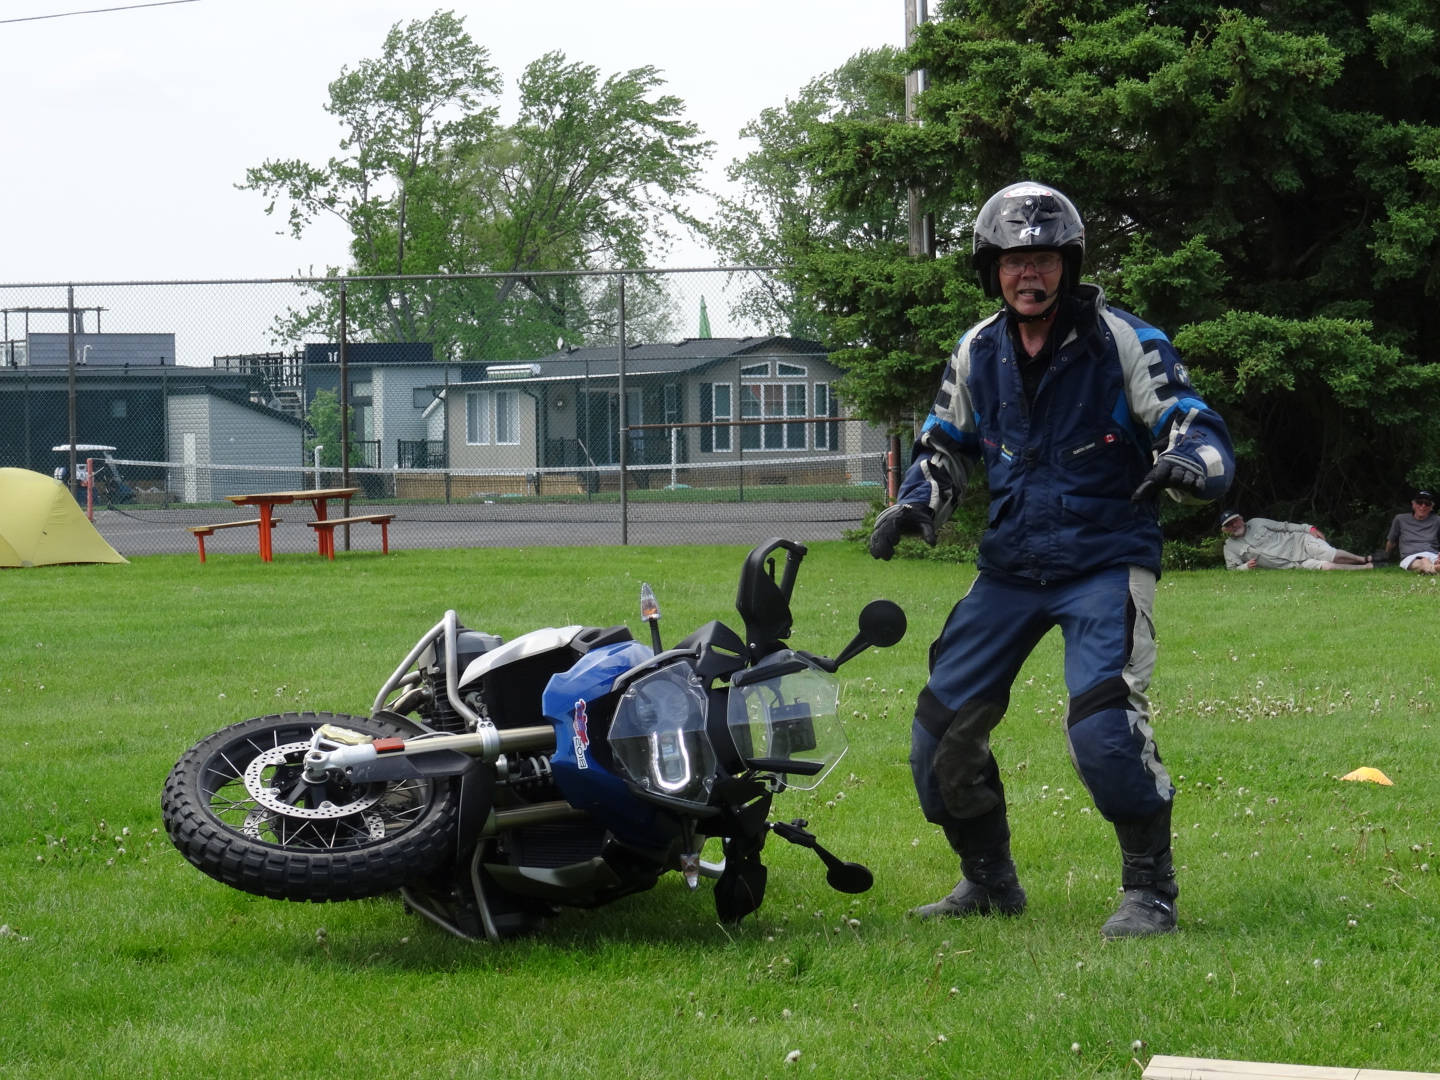 A photo of a man standing beside a fallen motorcycle